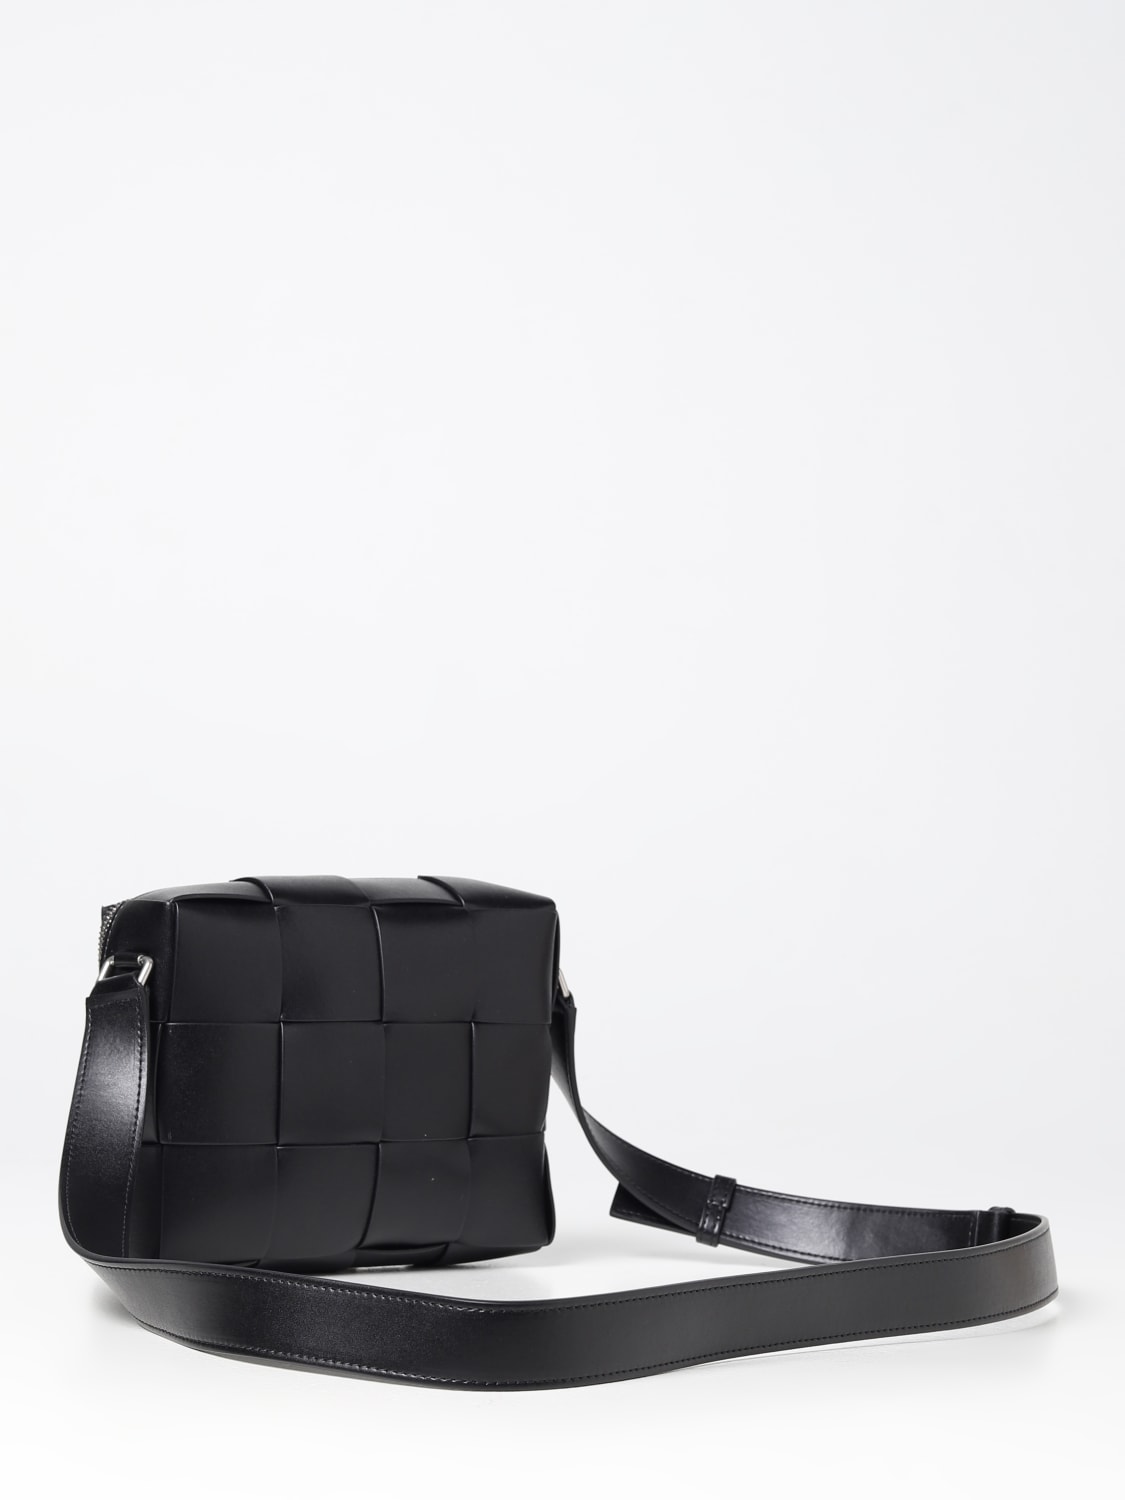 BOTTEGA VENETA: shoulder bag for man - Black  Bottega Veneta shoulder bag  755923V2HL1 online at